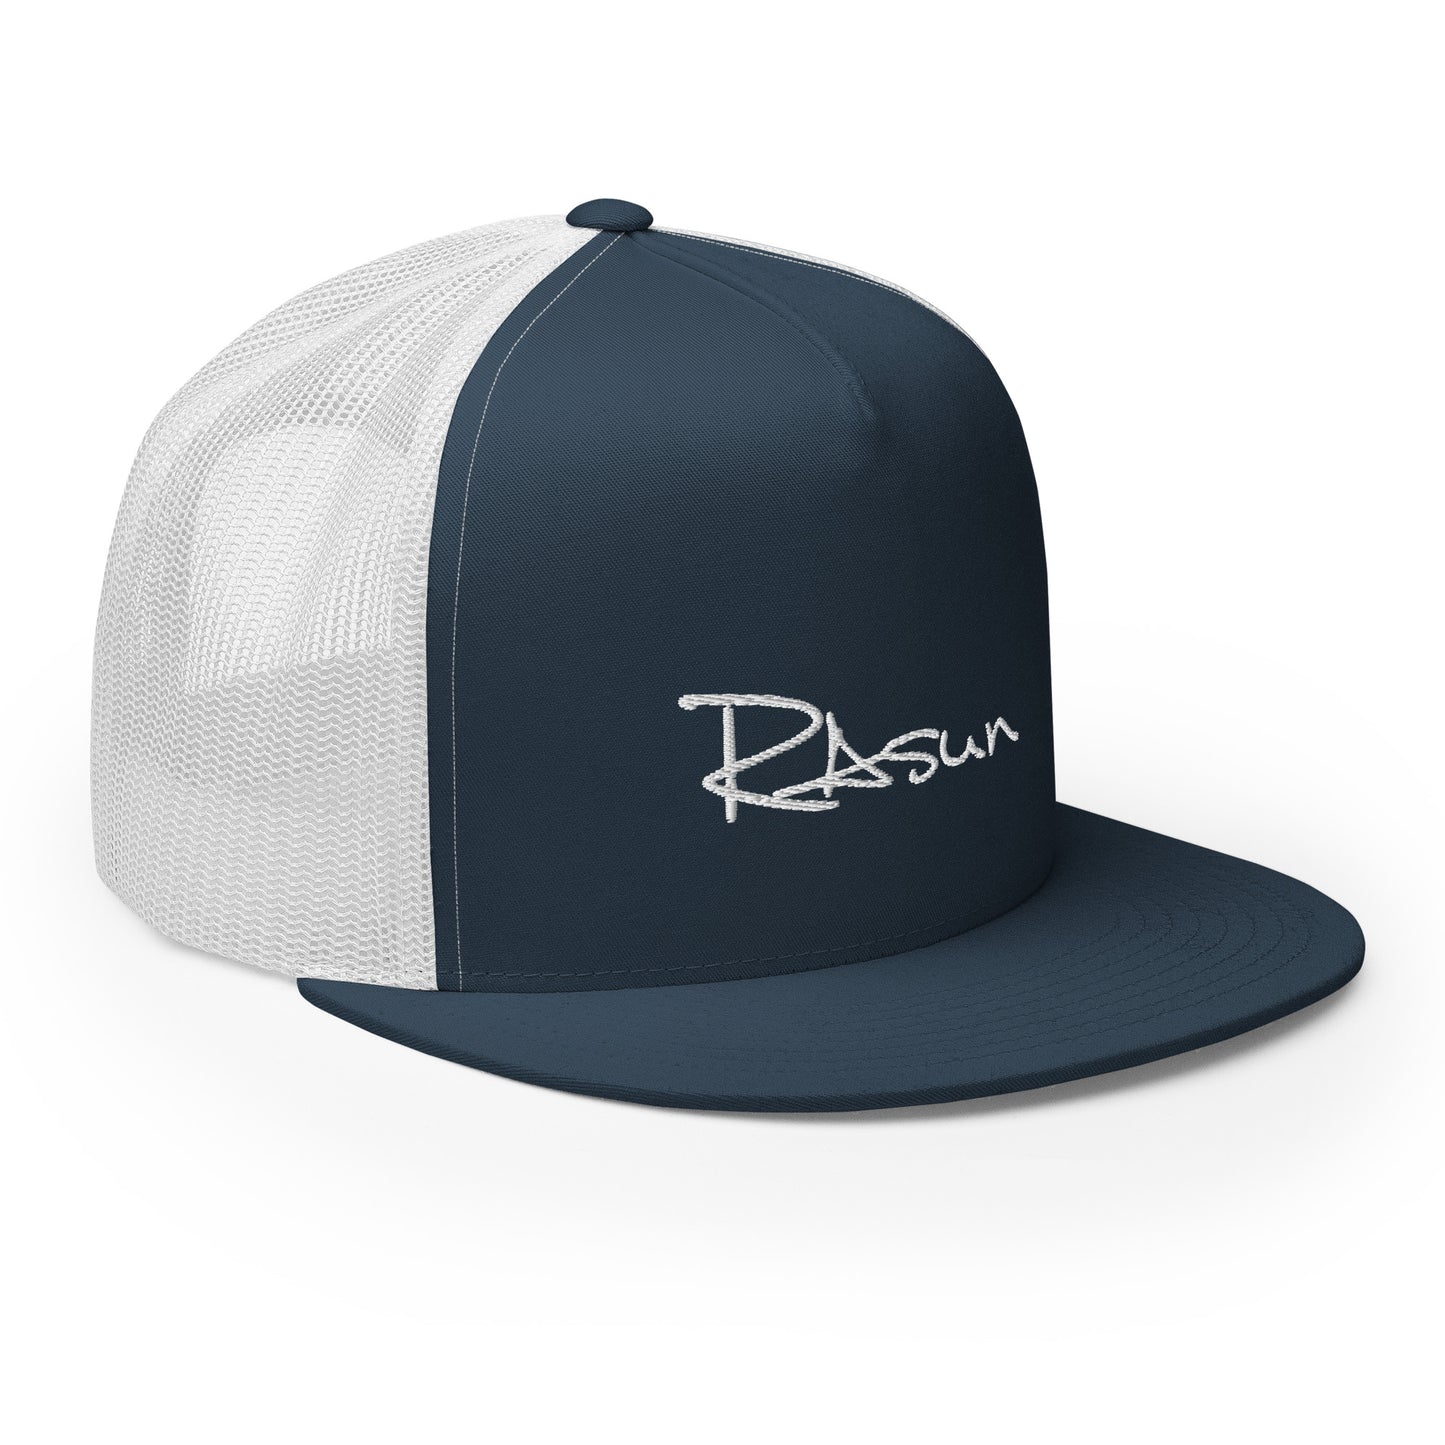 Rasun Embroidery Trucker Hat